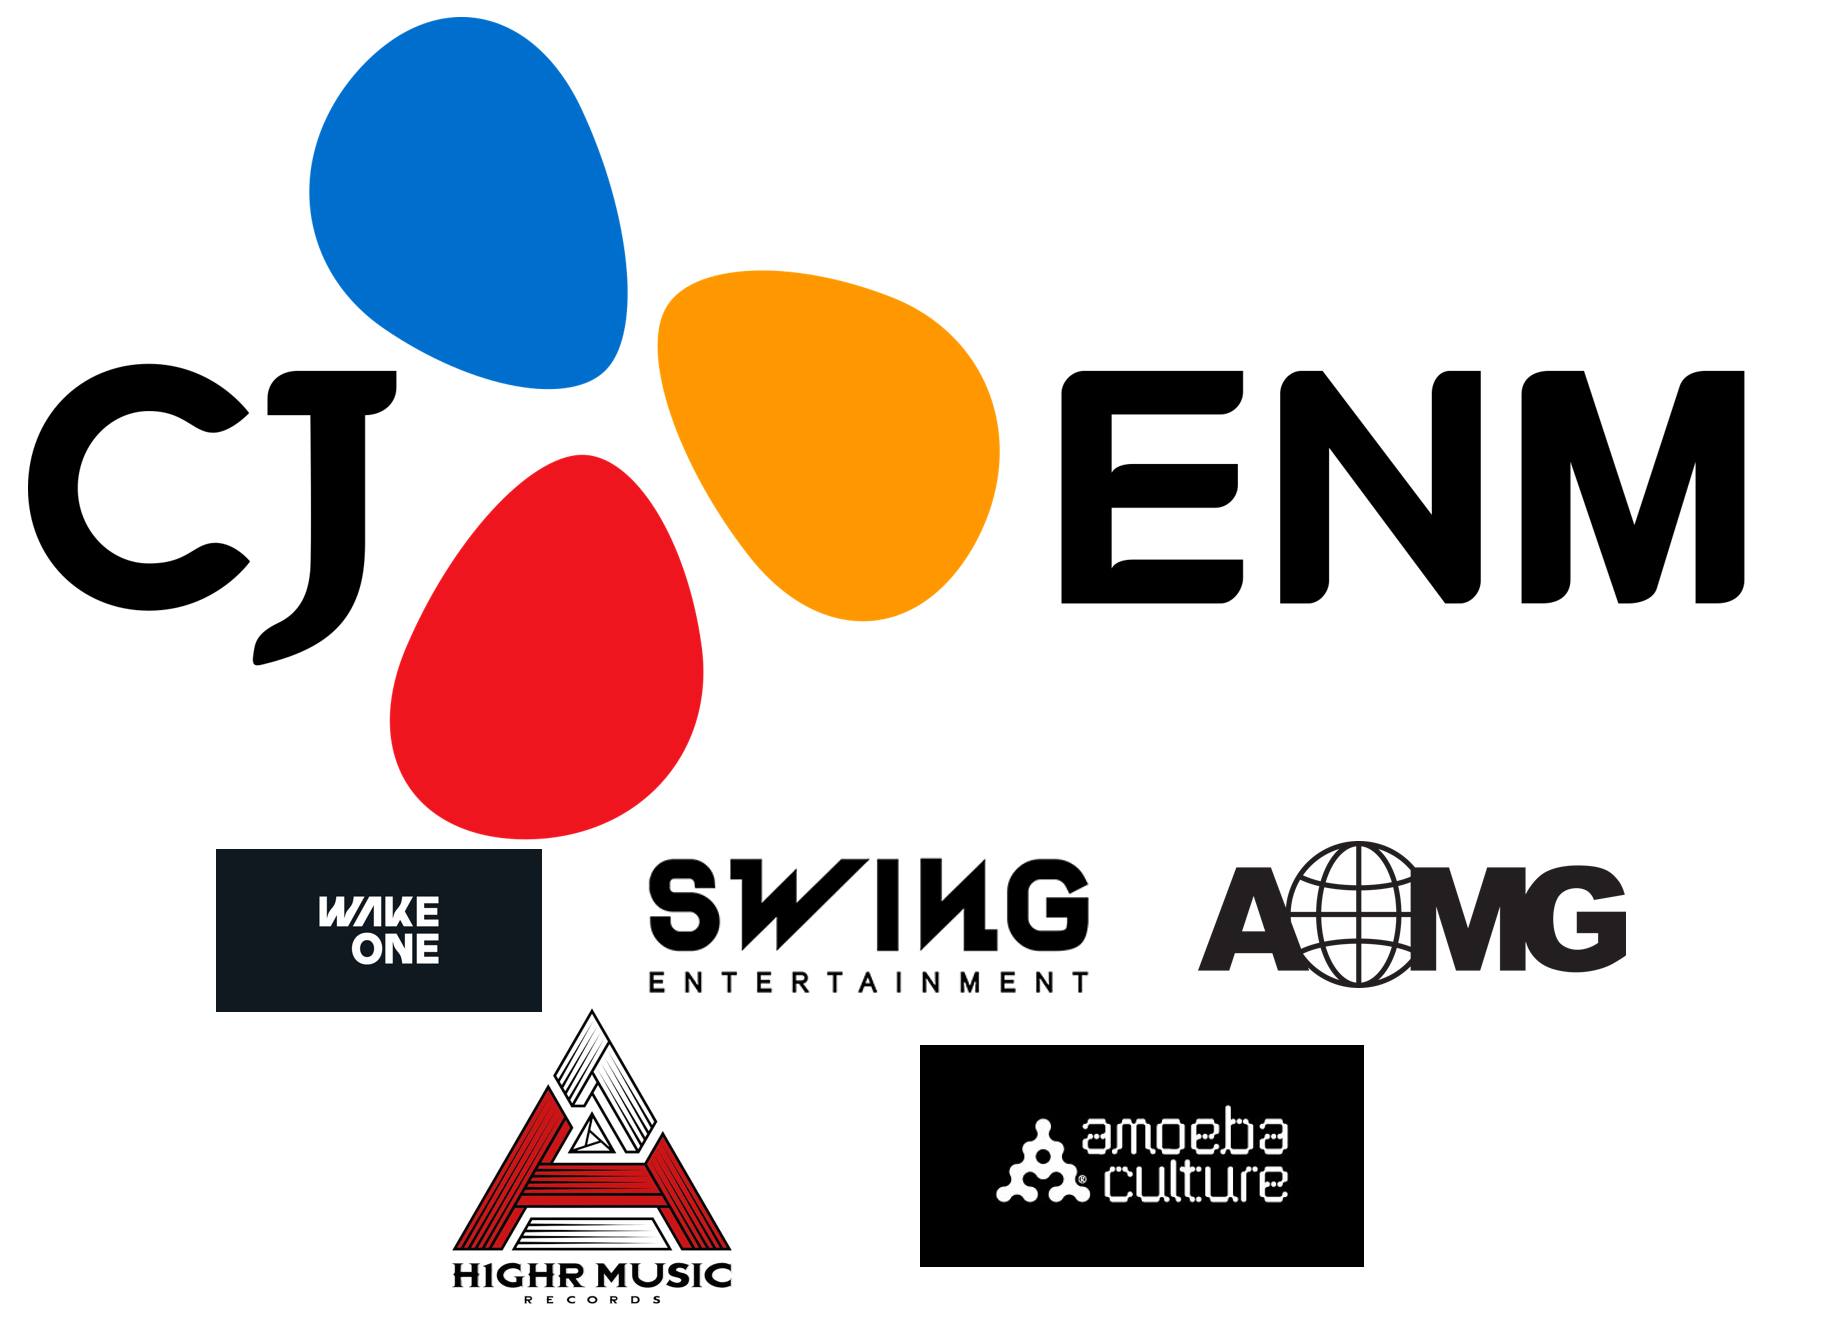 CJ-ENM-로고와-산하-레이블-로고